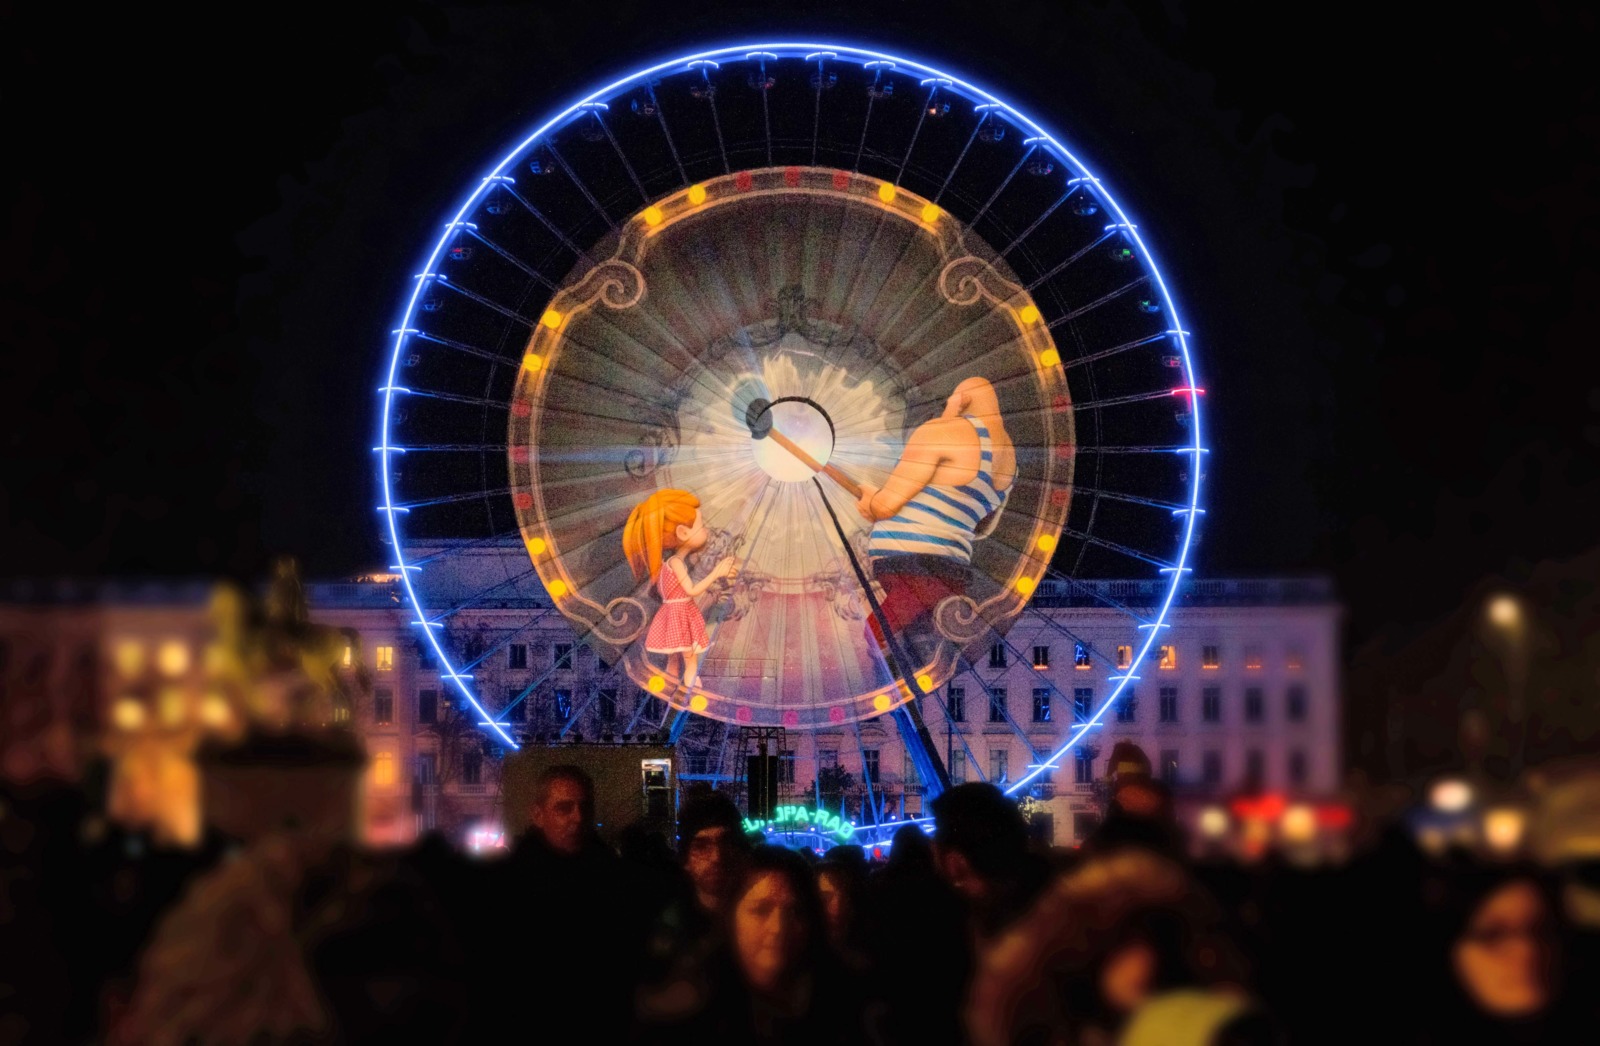 Lyon Festival of Lights. Photo @Laboo via Twenty20